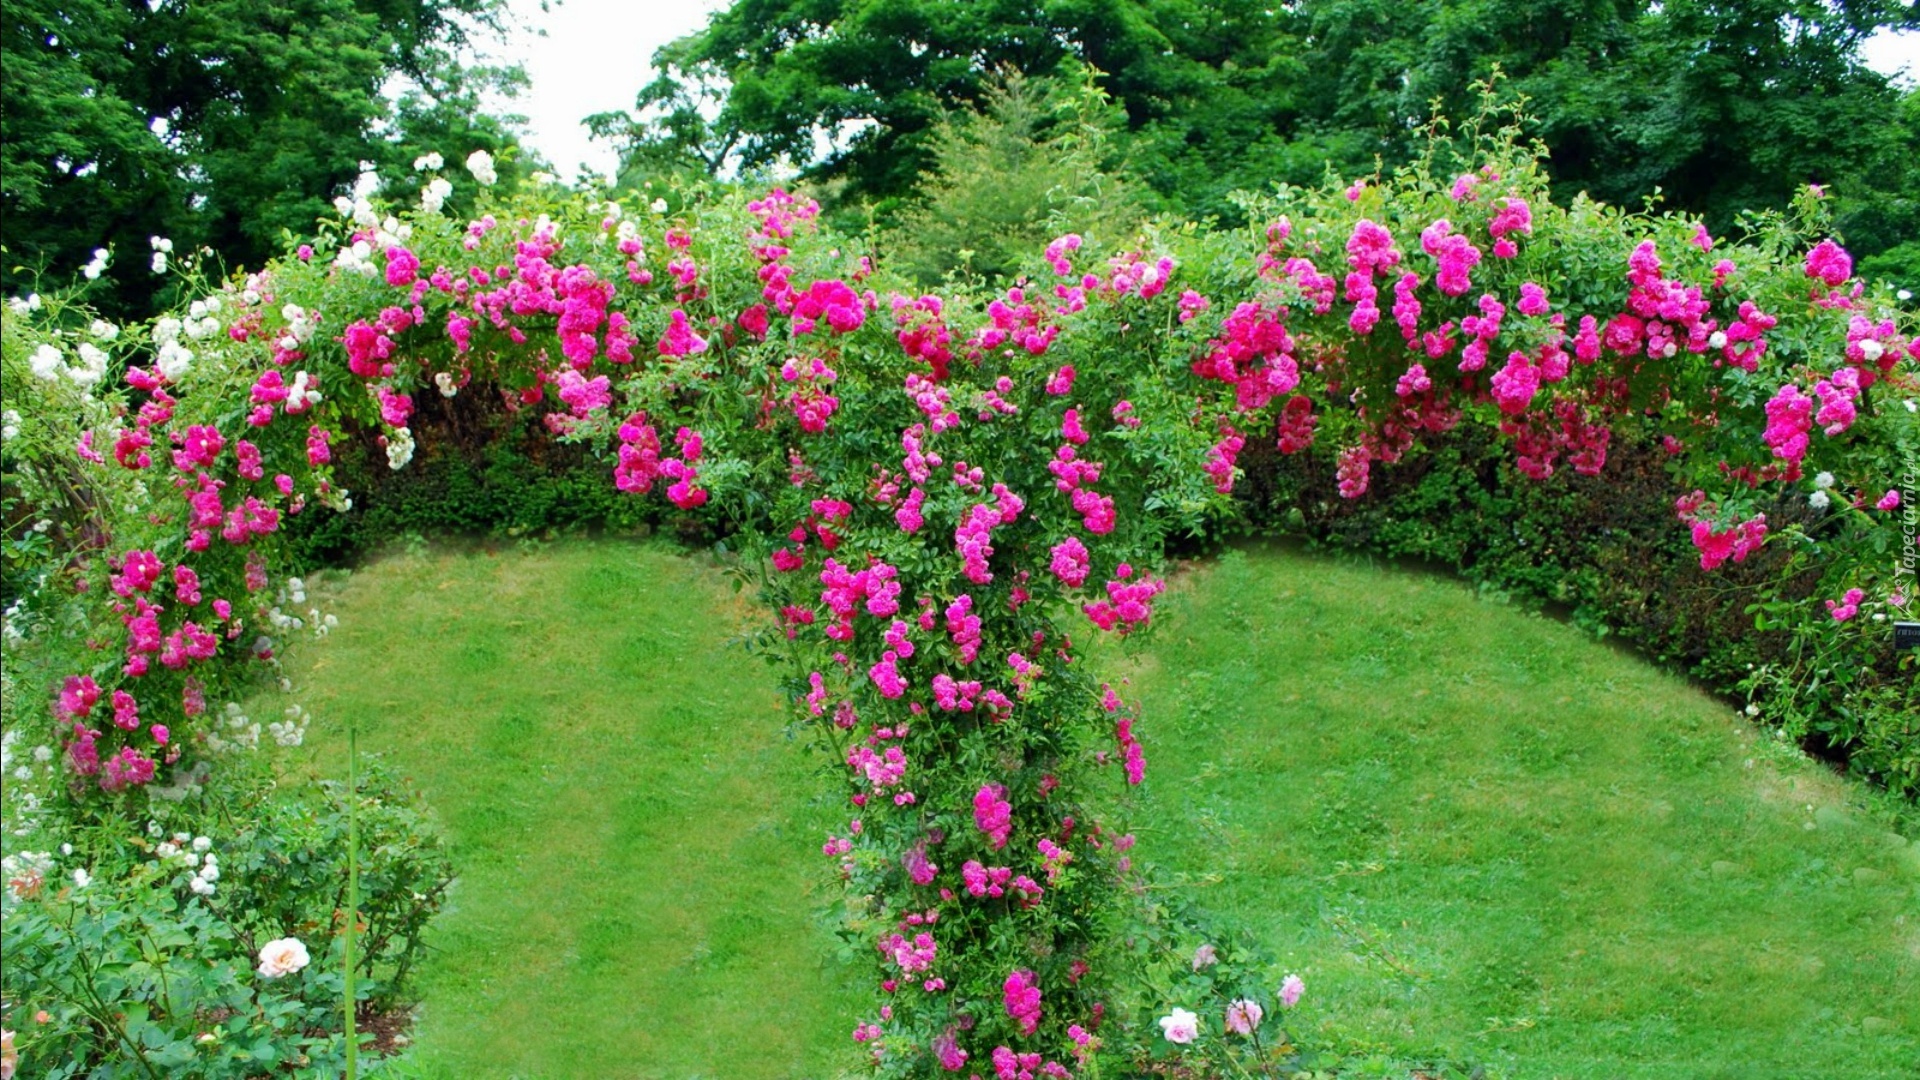 Ogród, Róże, Drzewa